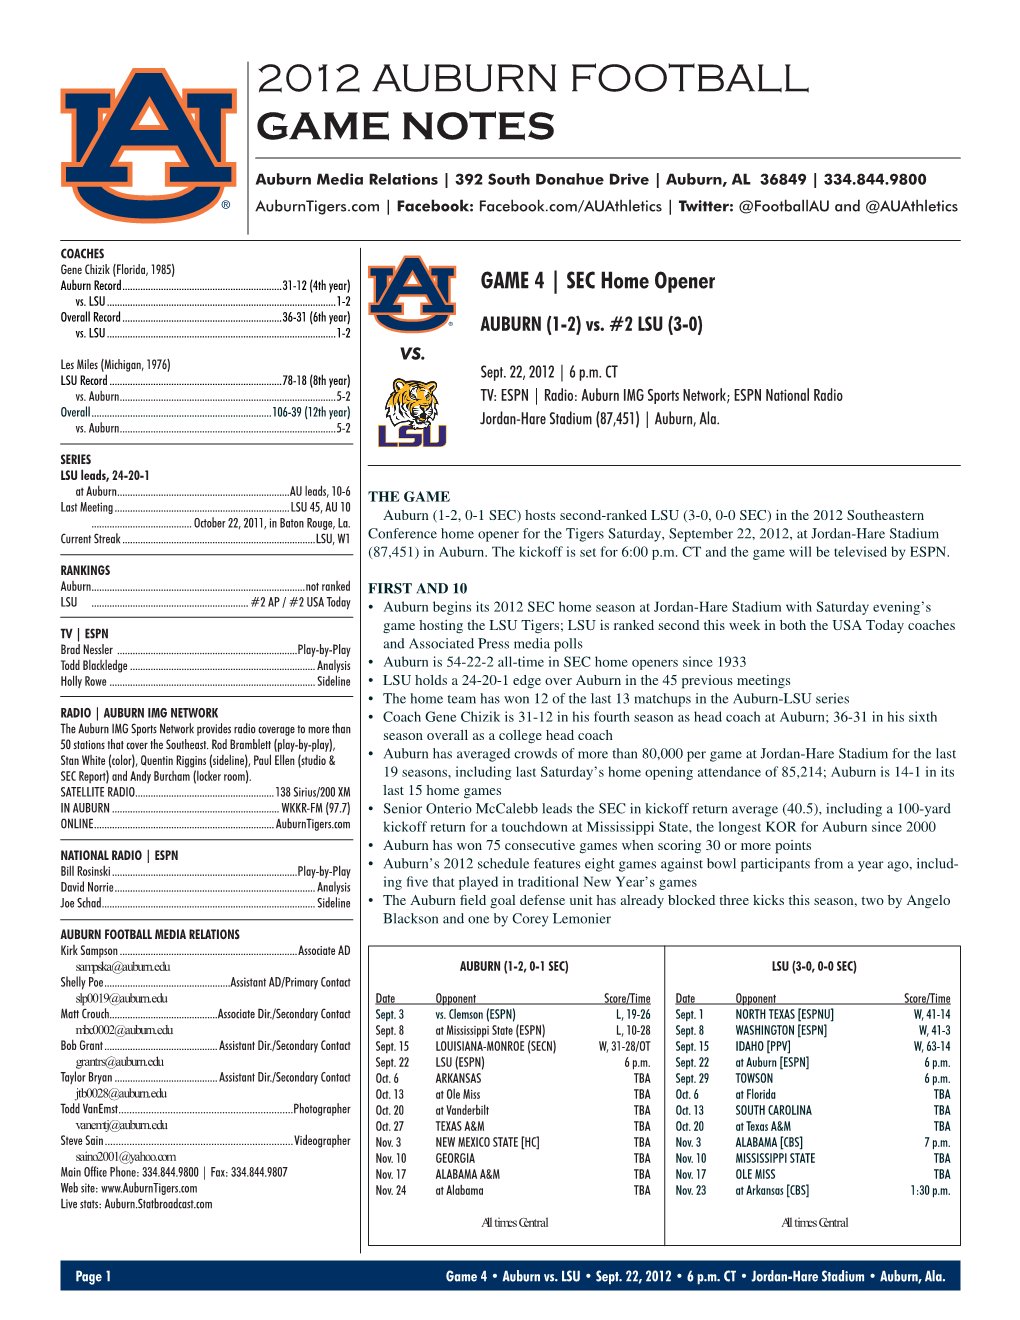 2012 Auburn Football Game Notes